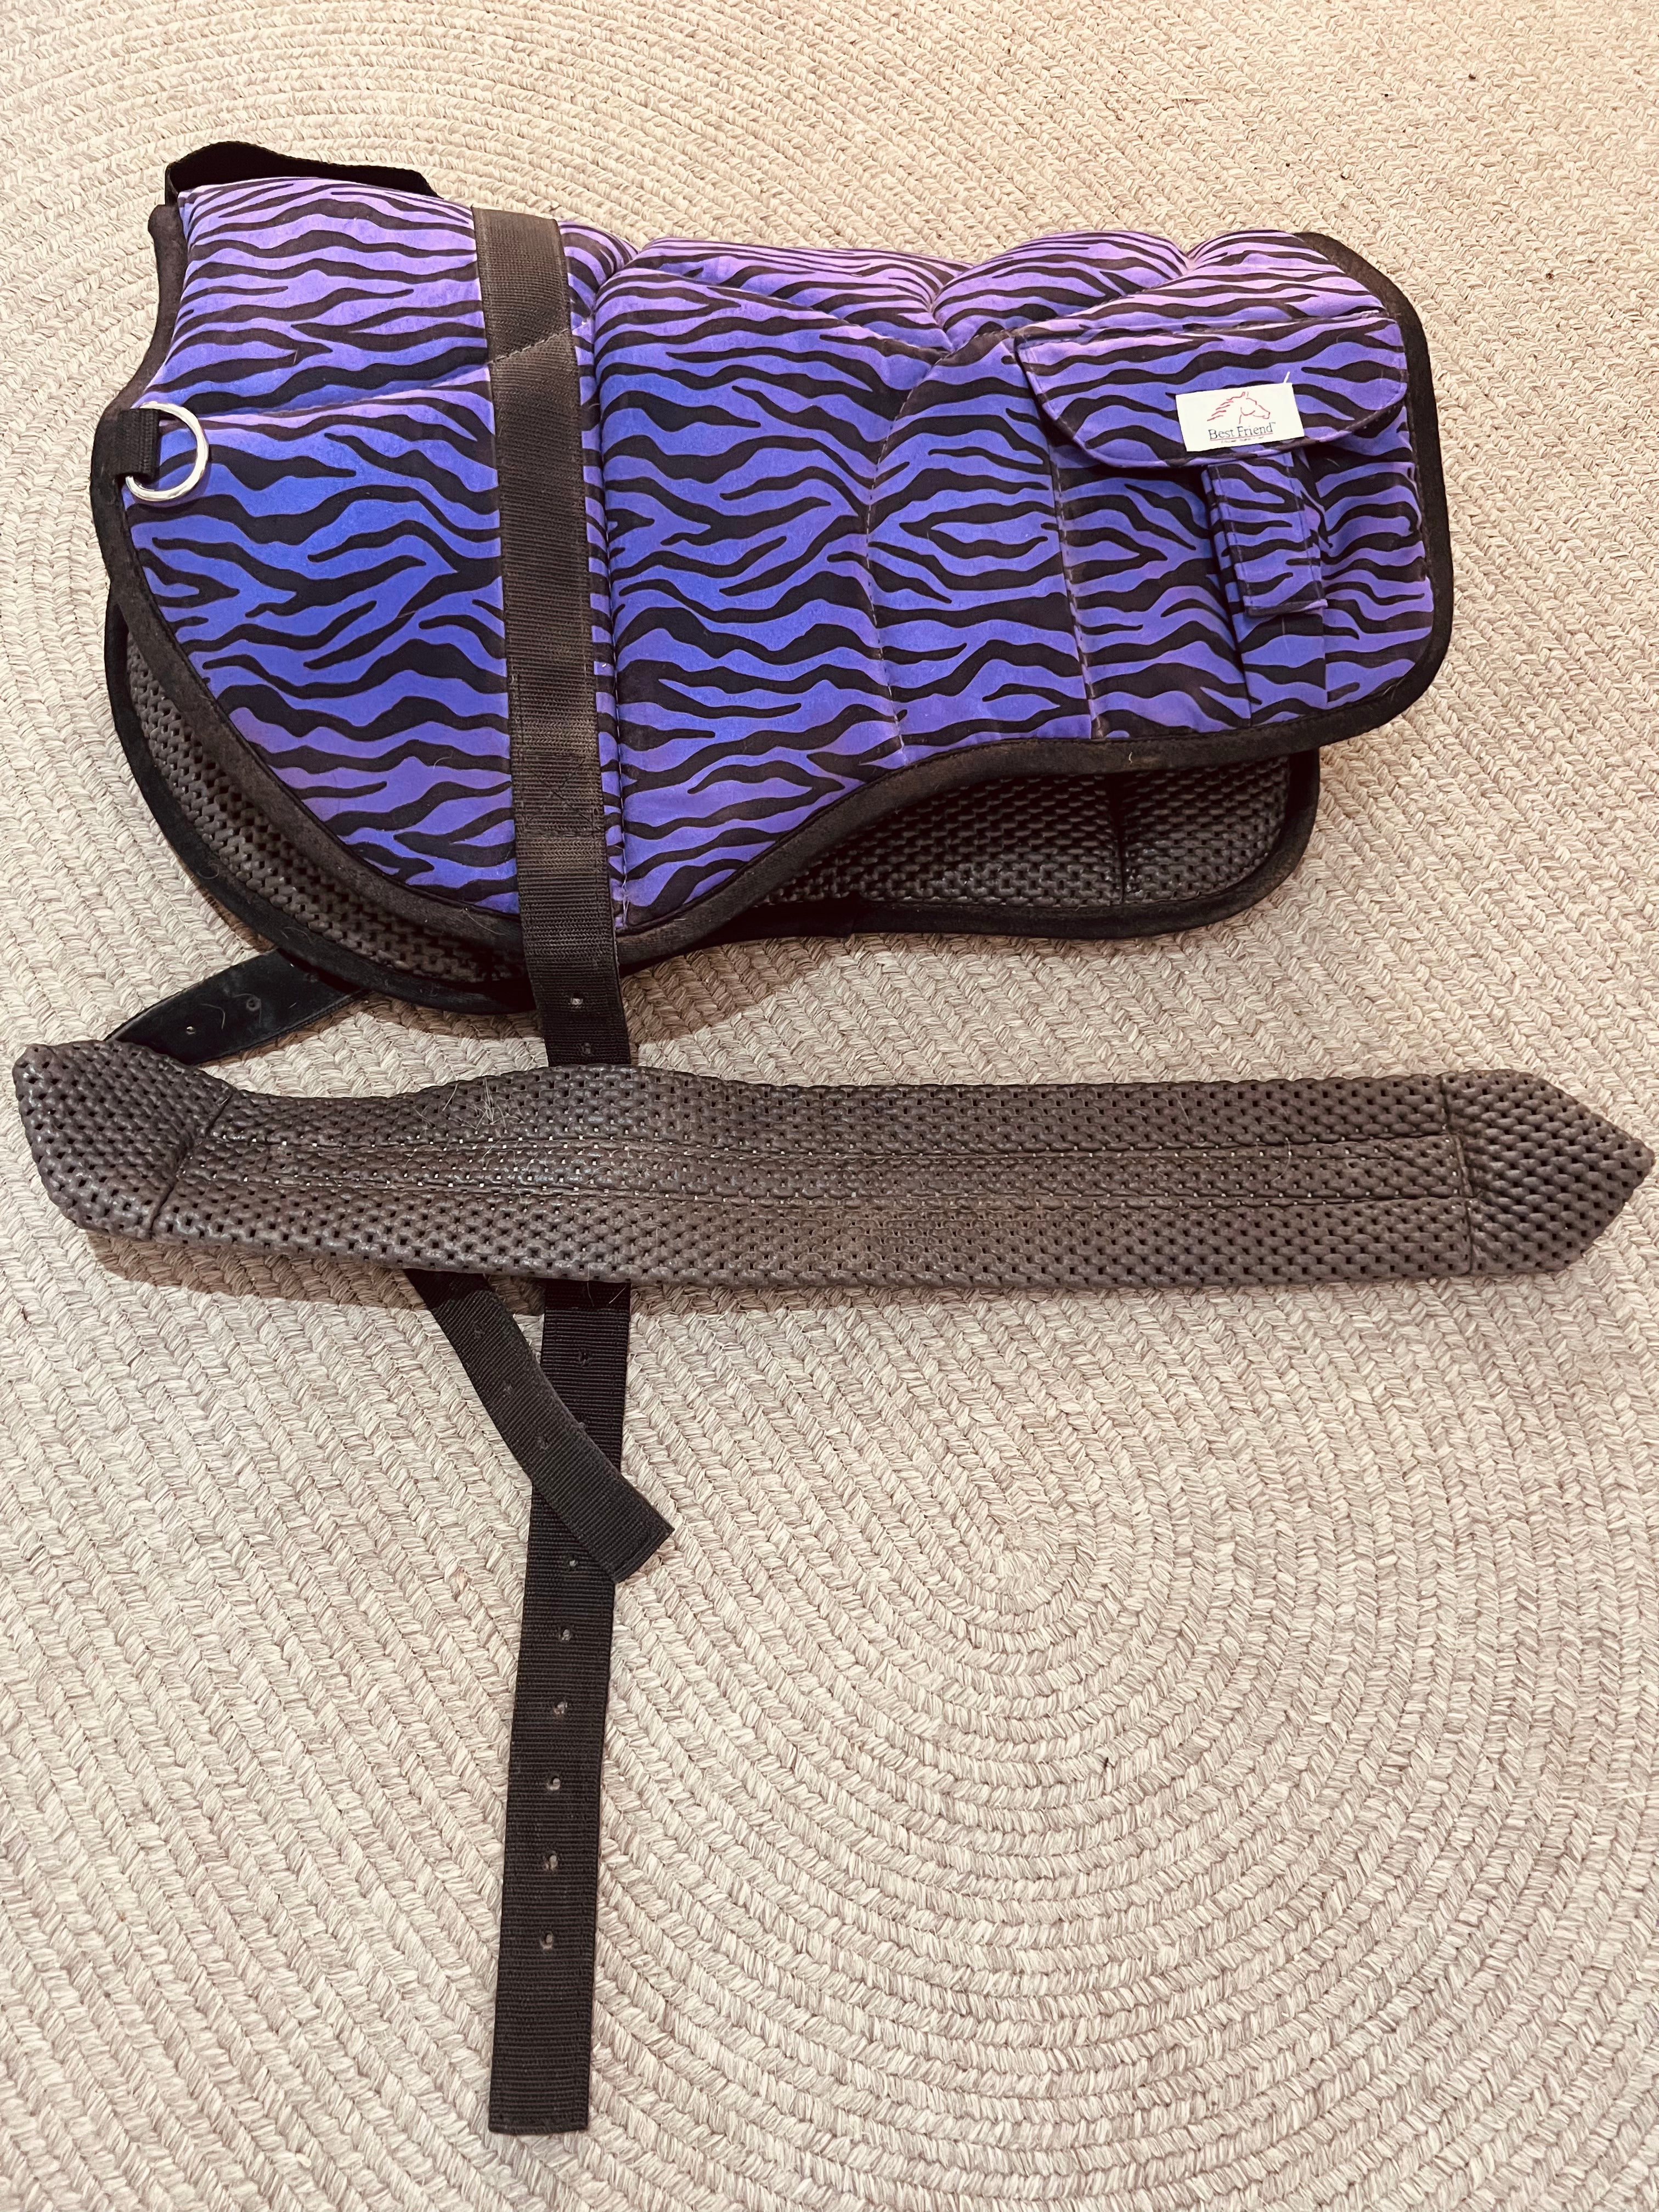 Best Friend Western Style Bareback Pad with Pockets - Horse - Purple Zebra